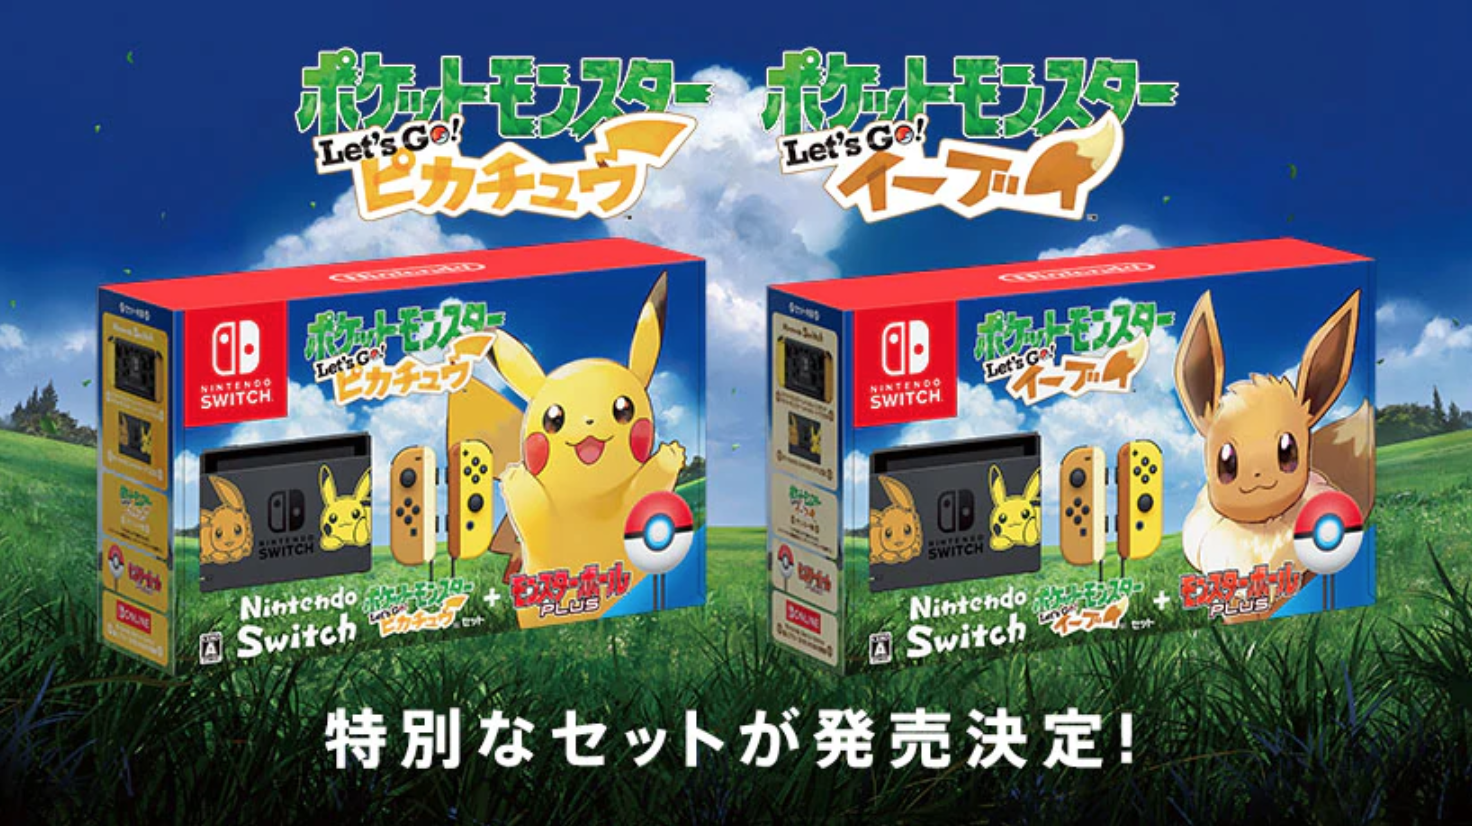 Nintendo Switch Japan Version блок питание. Ray Swich. Let's go! To Japan. Гоу джой